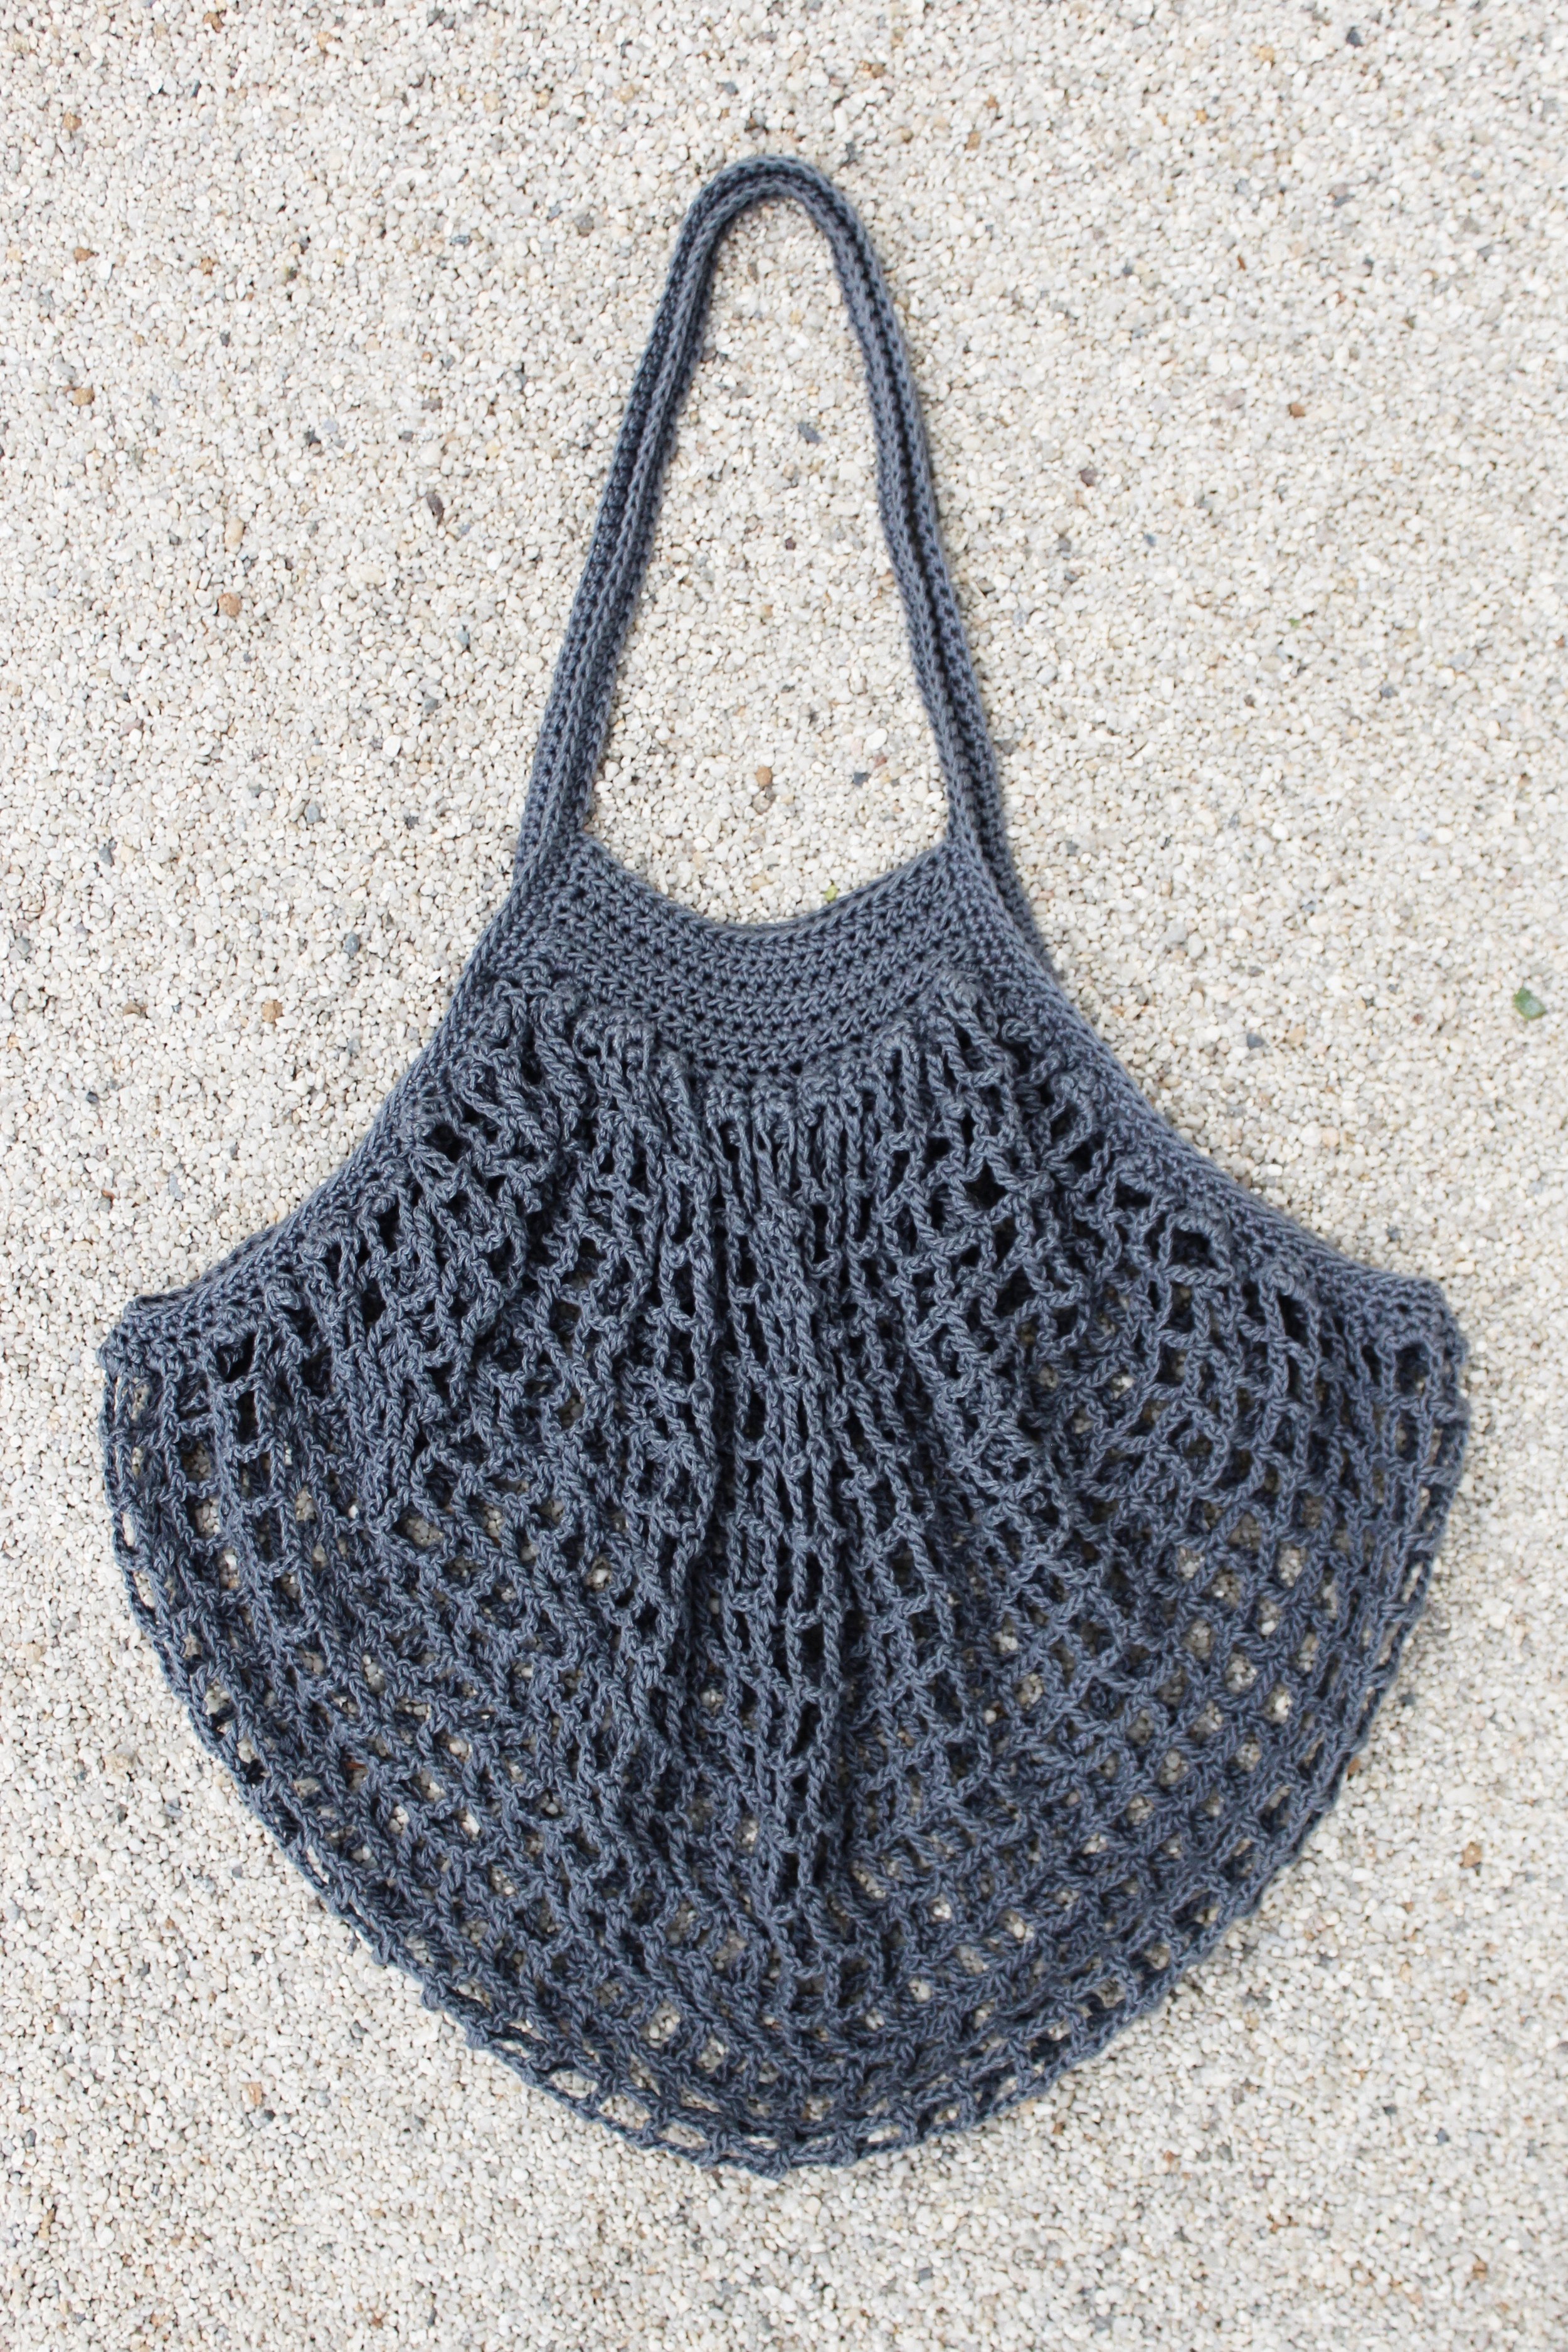 Crochet marketbag